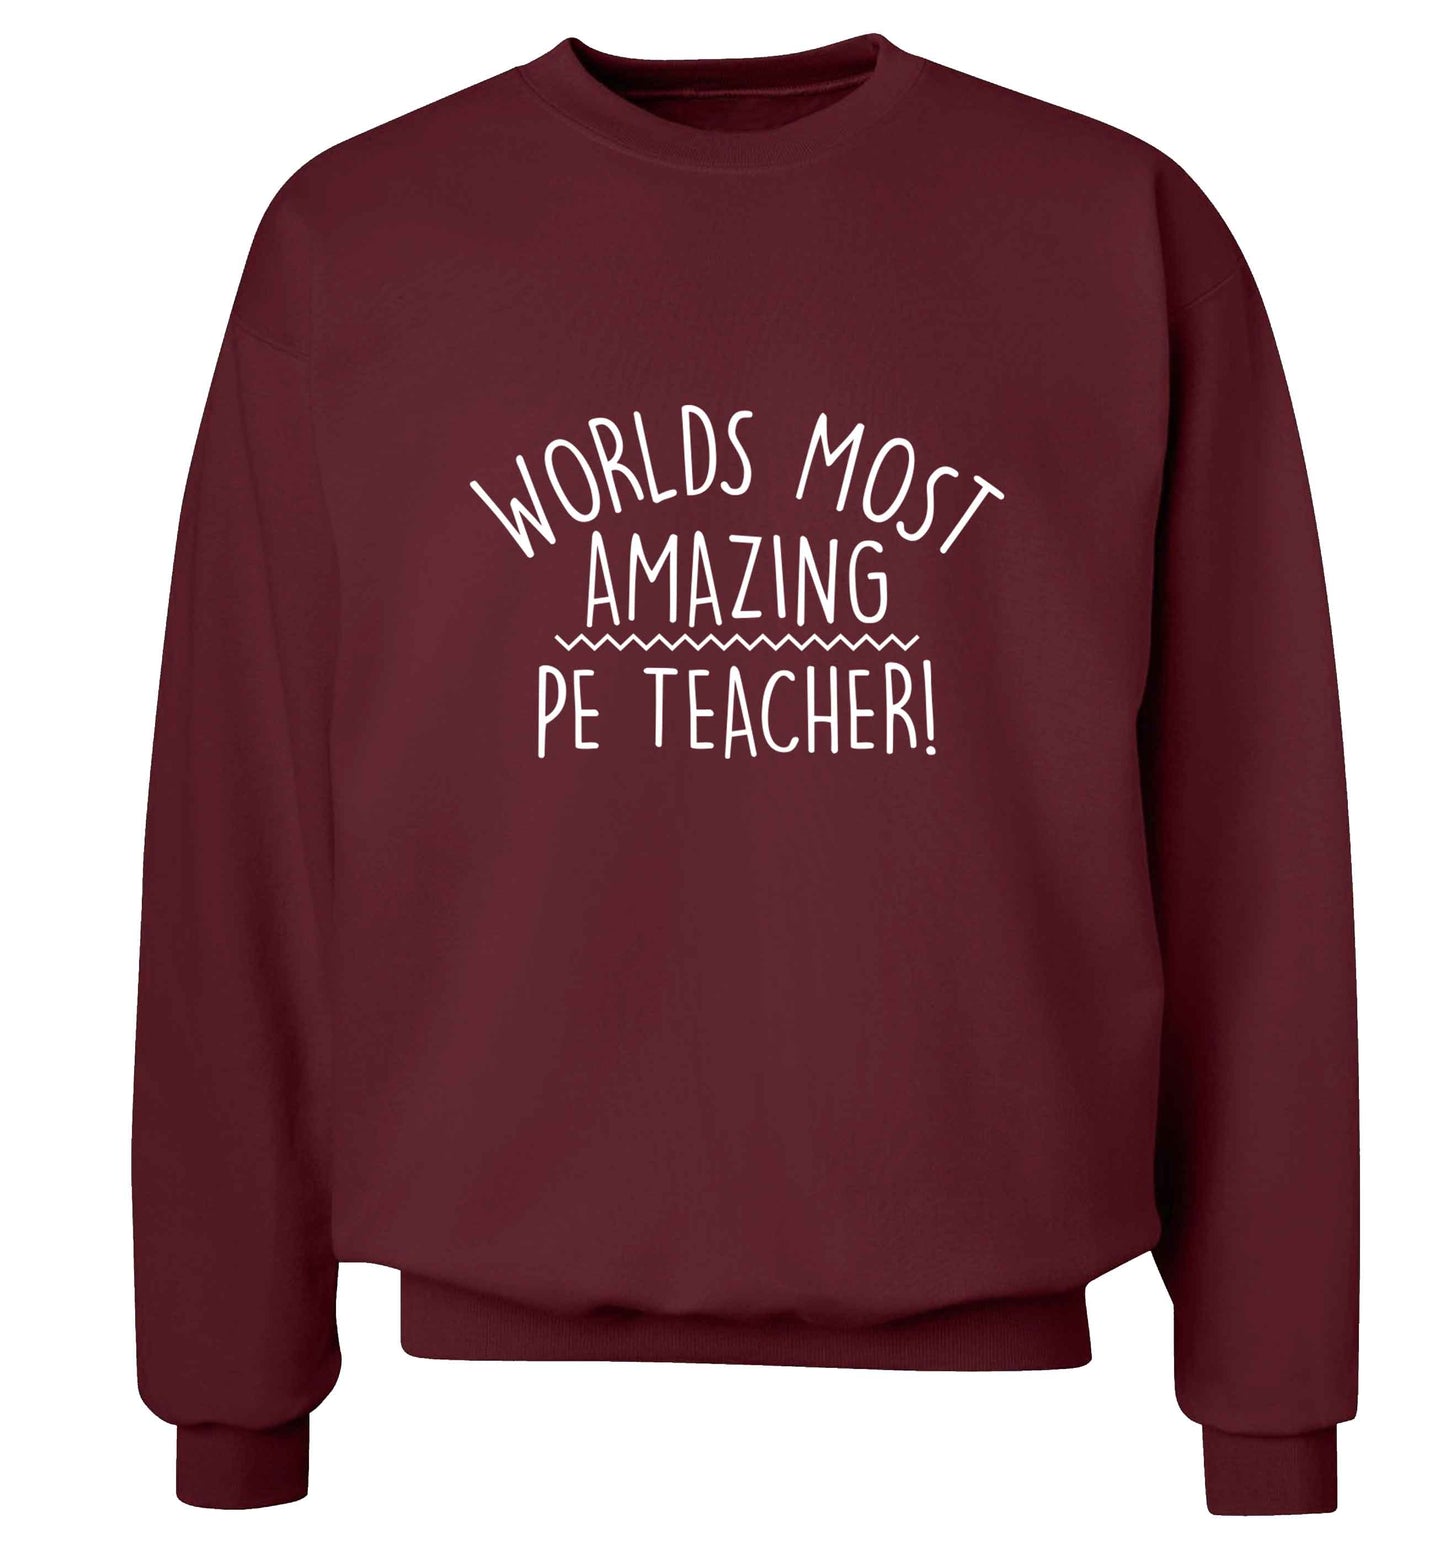 Worlds most amazing PE teacher adult's unisex maroon sweater 2XL